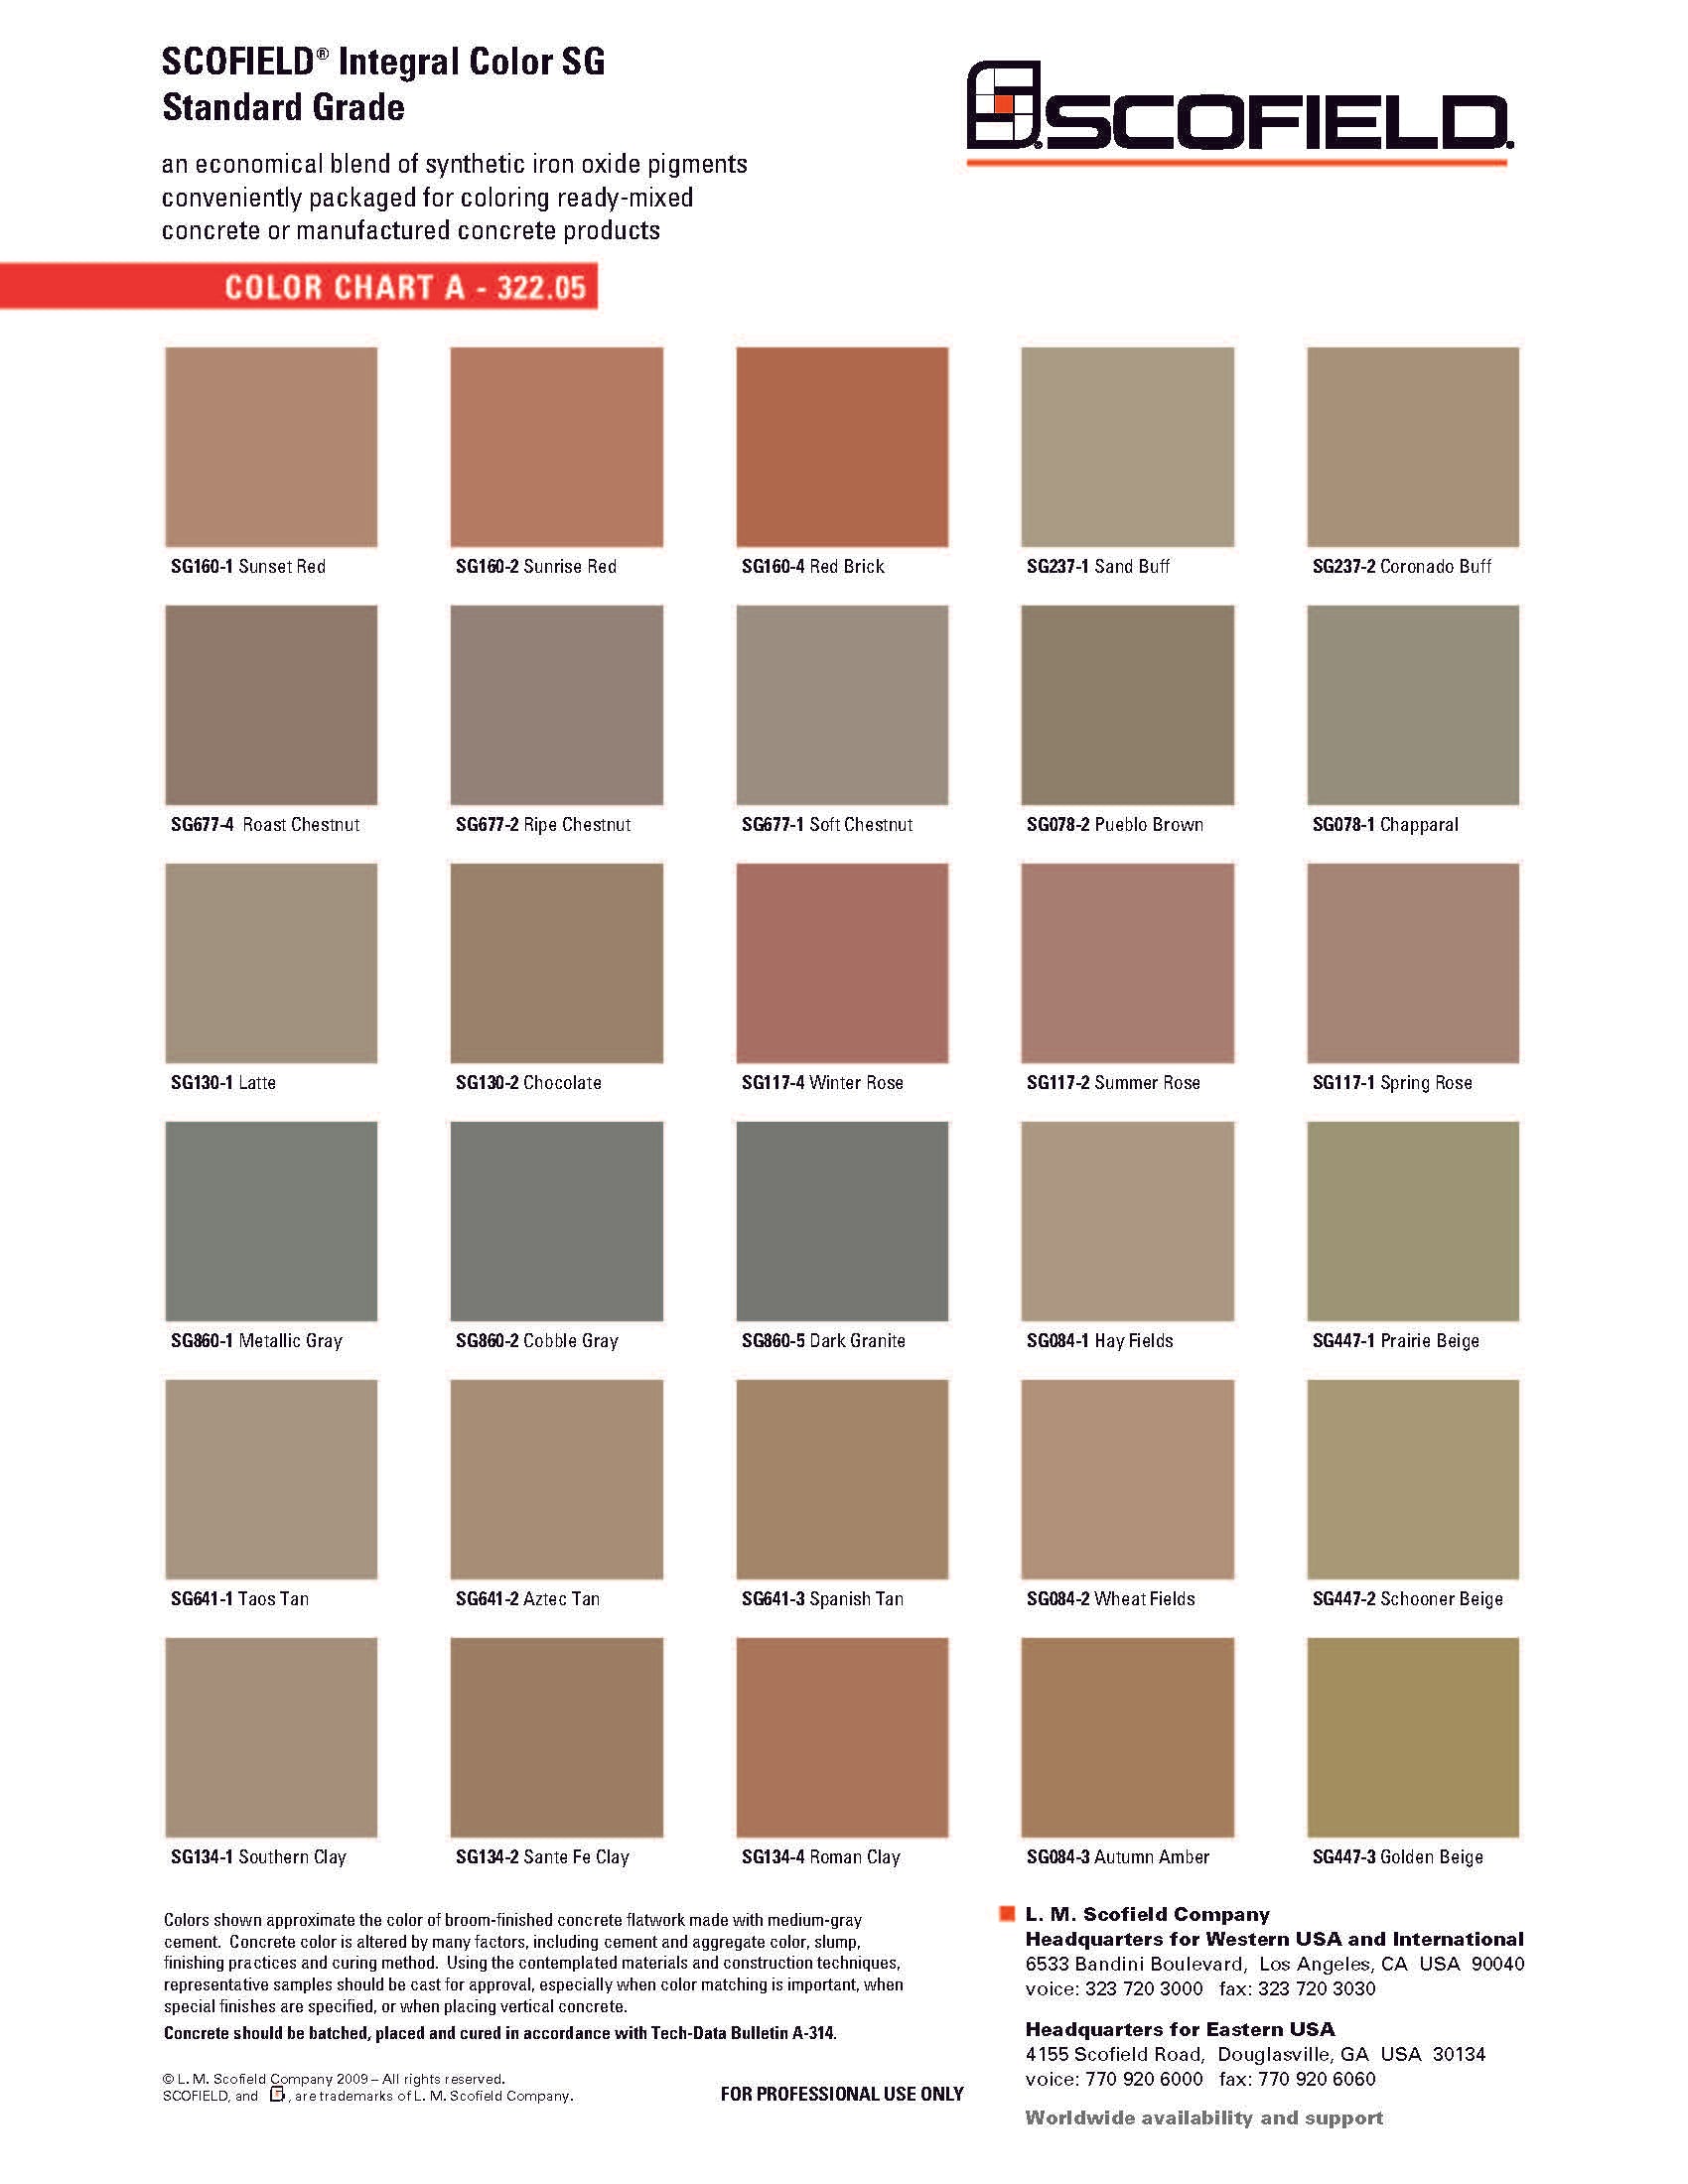 Scofield Chromix G Pigment Granules, Integral Color for Concrete